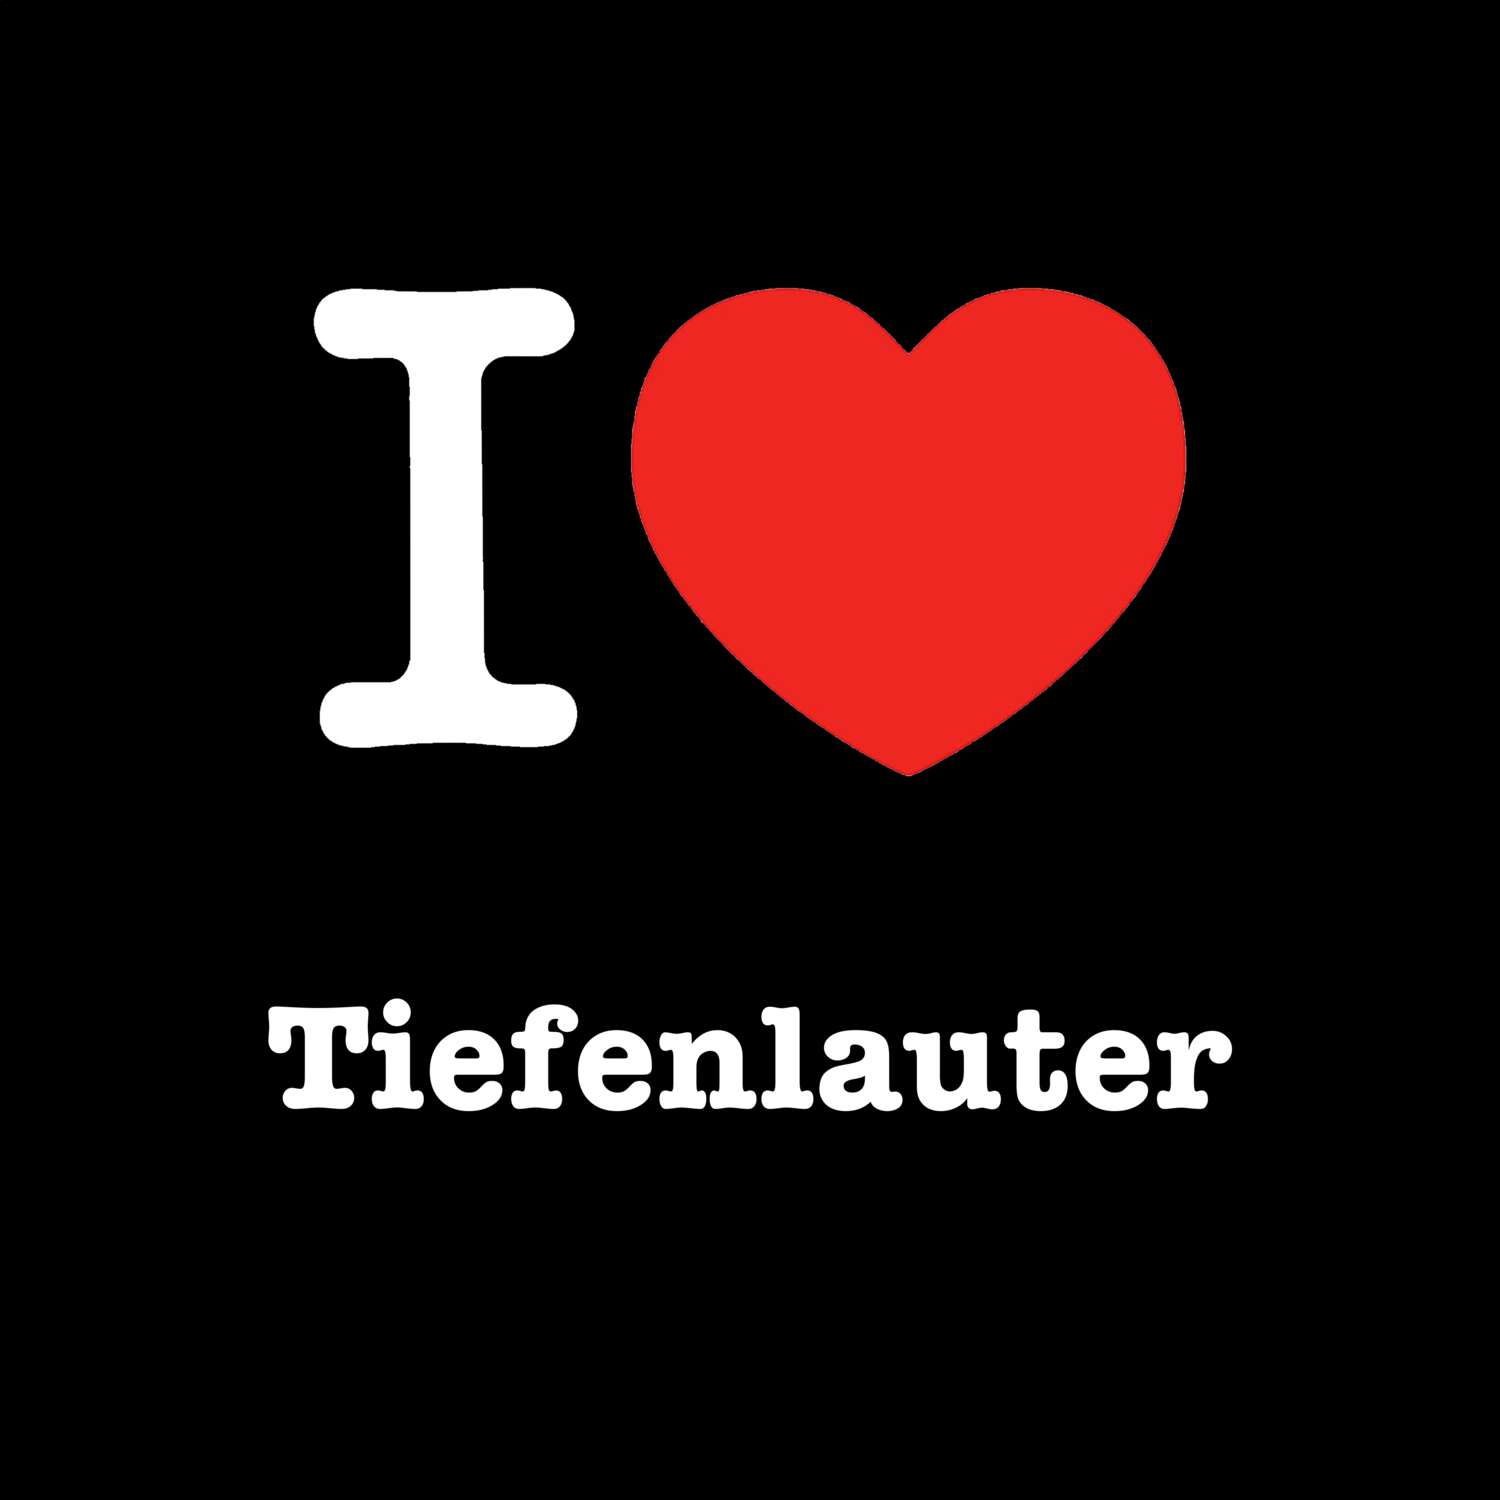 Tiefenlauter T-Shirt »I love«